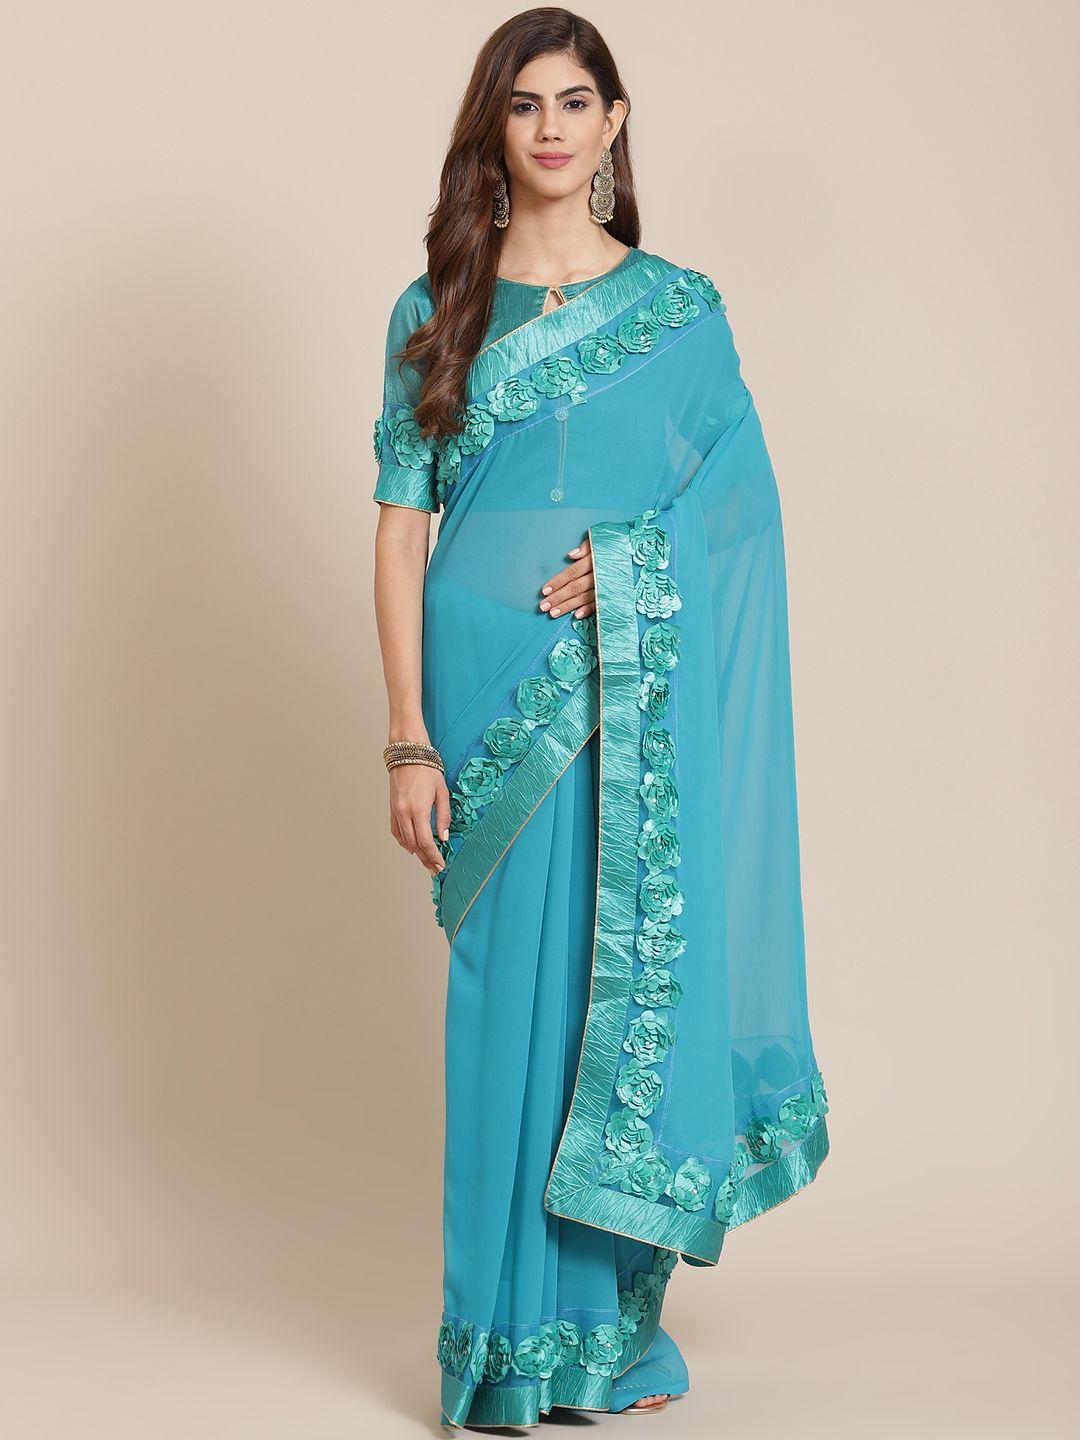 serona fabrics turquoise blue embellished pure georgette saree